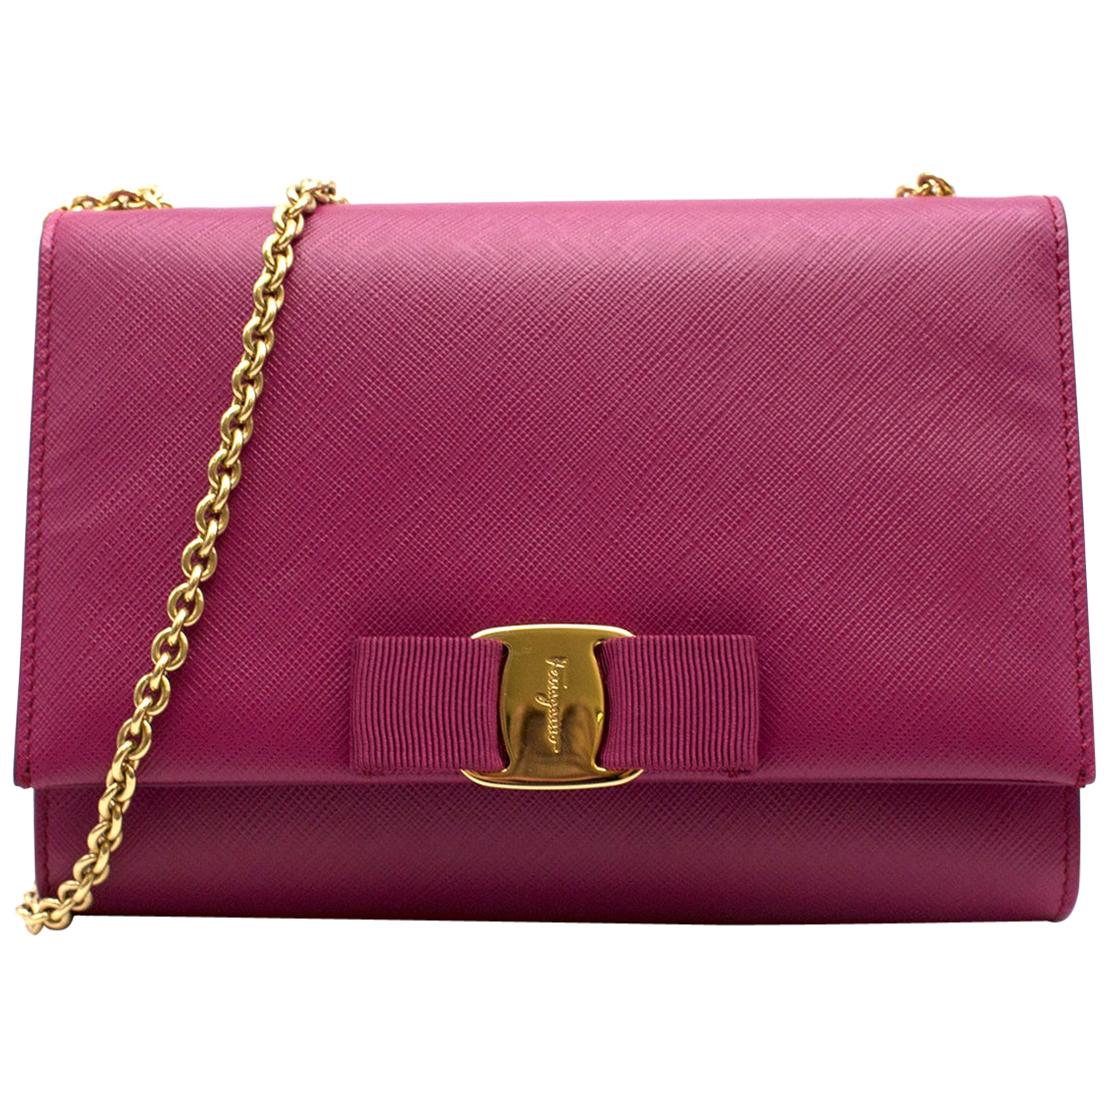 Salvatore Ferragamo Pink Leather Medium Ginny Shoulder Bag